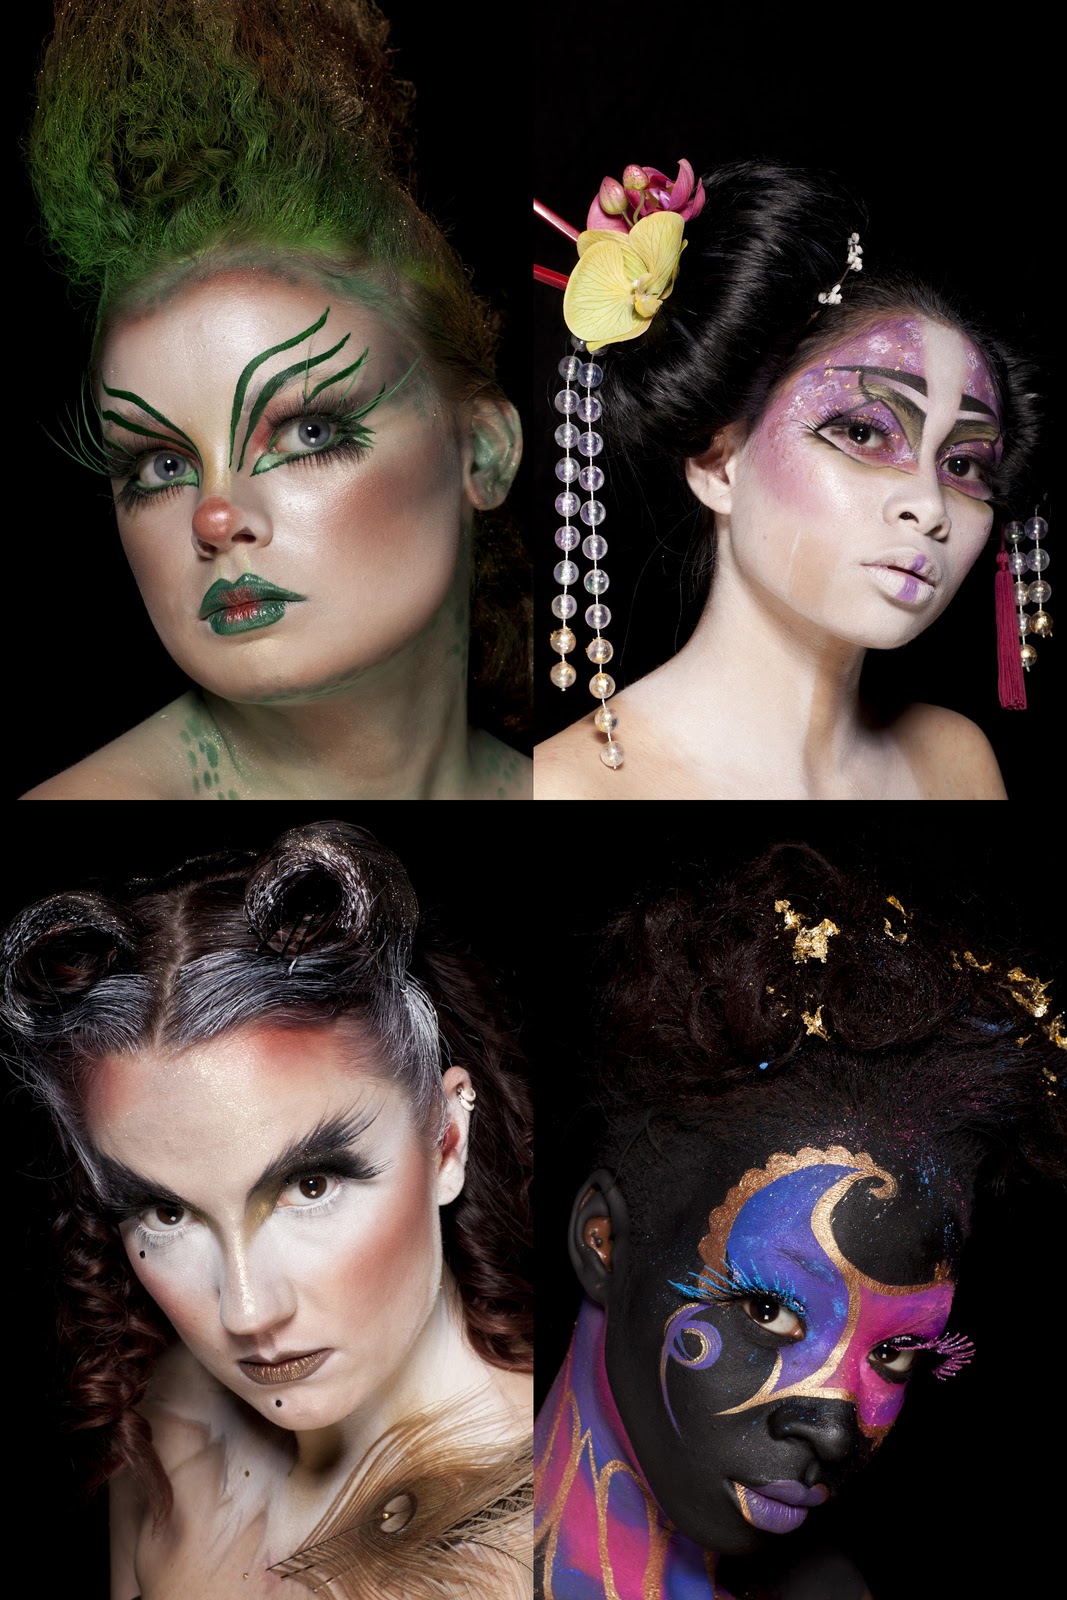 Illamasqua+Beauty+and+makeup+course+students.jpg